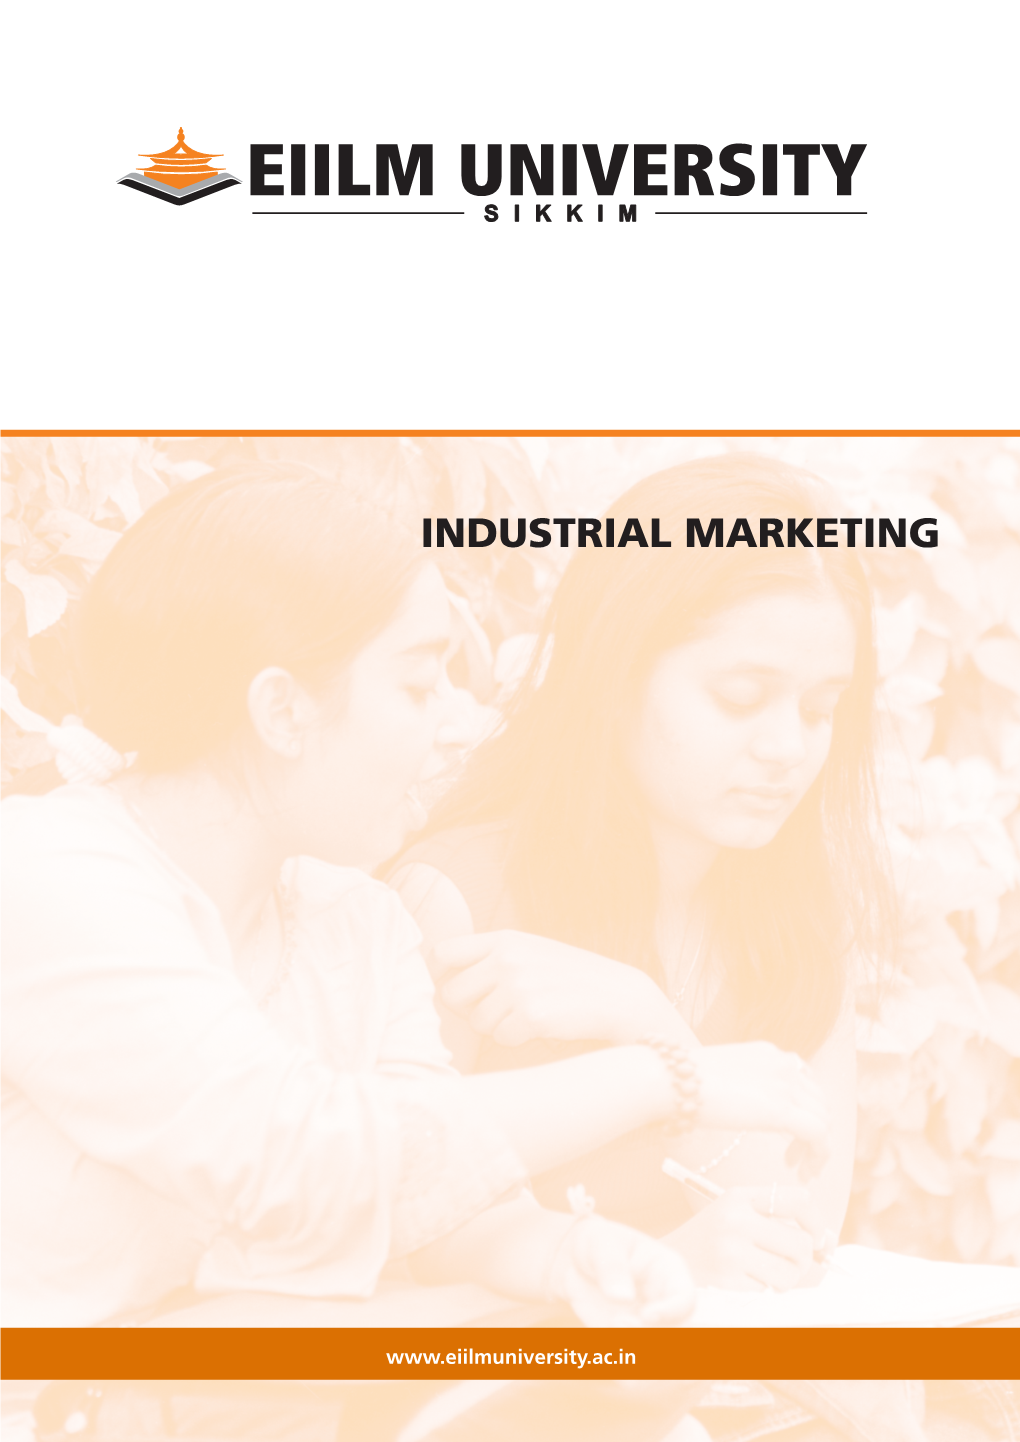 Industrial Marketing